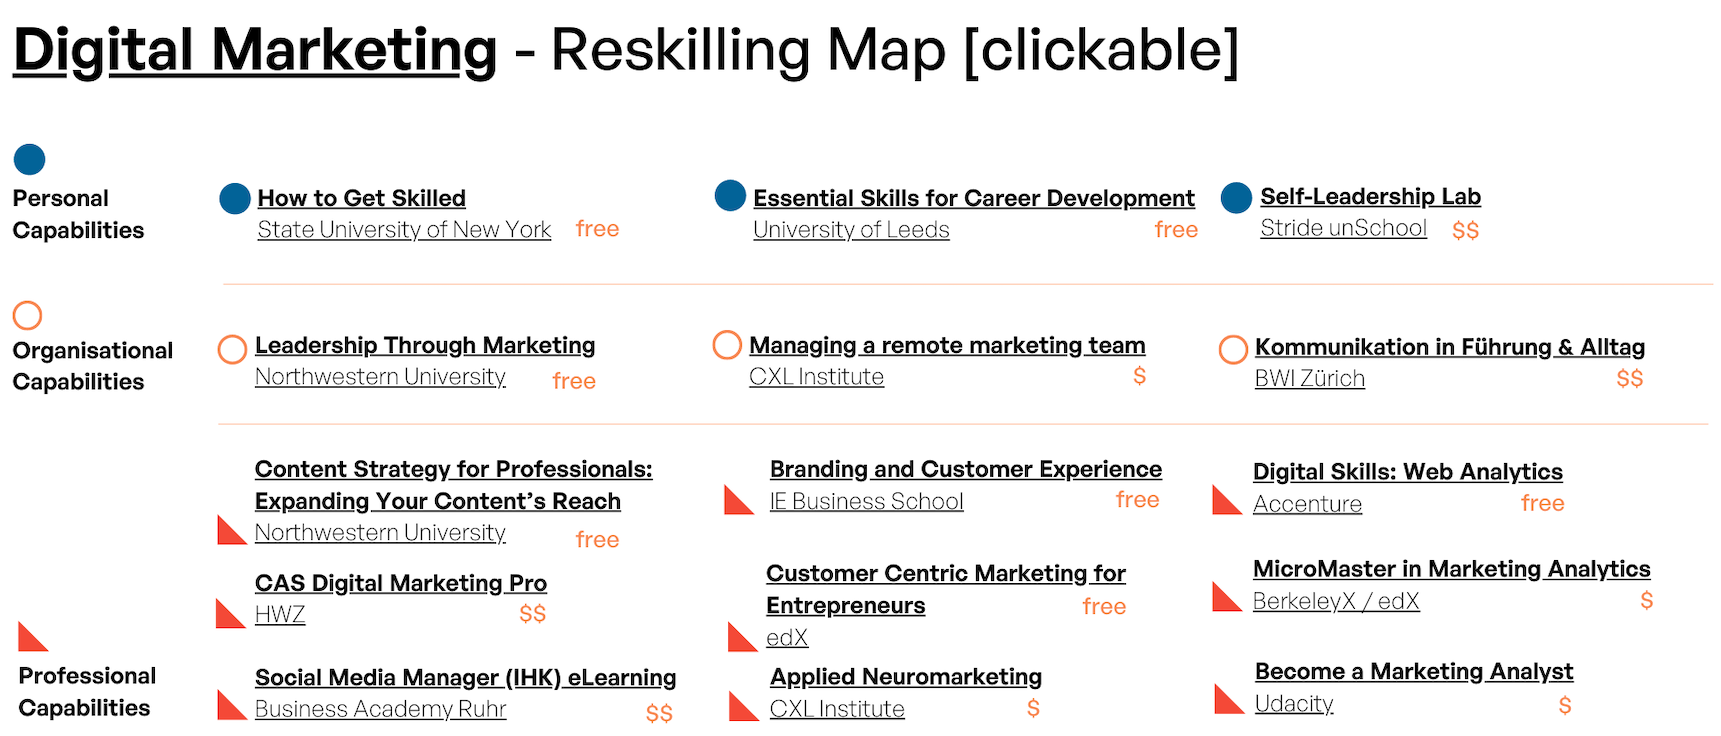 Digital Marketing - Reskilling Map